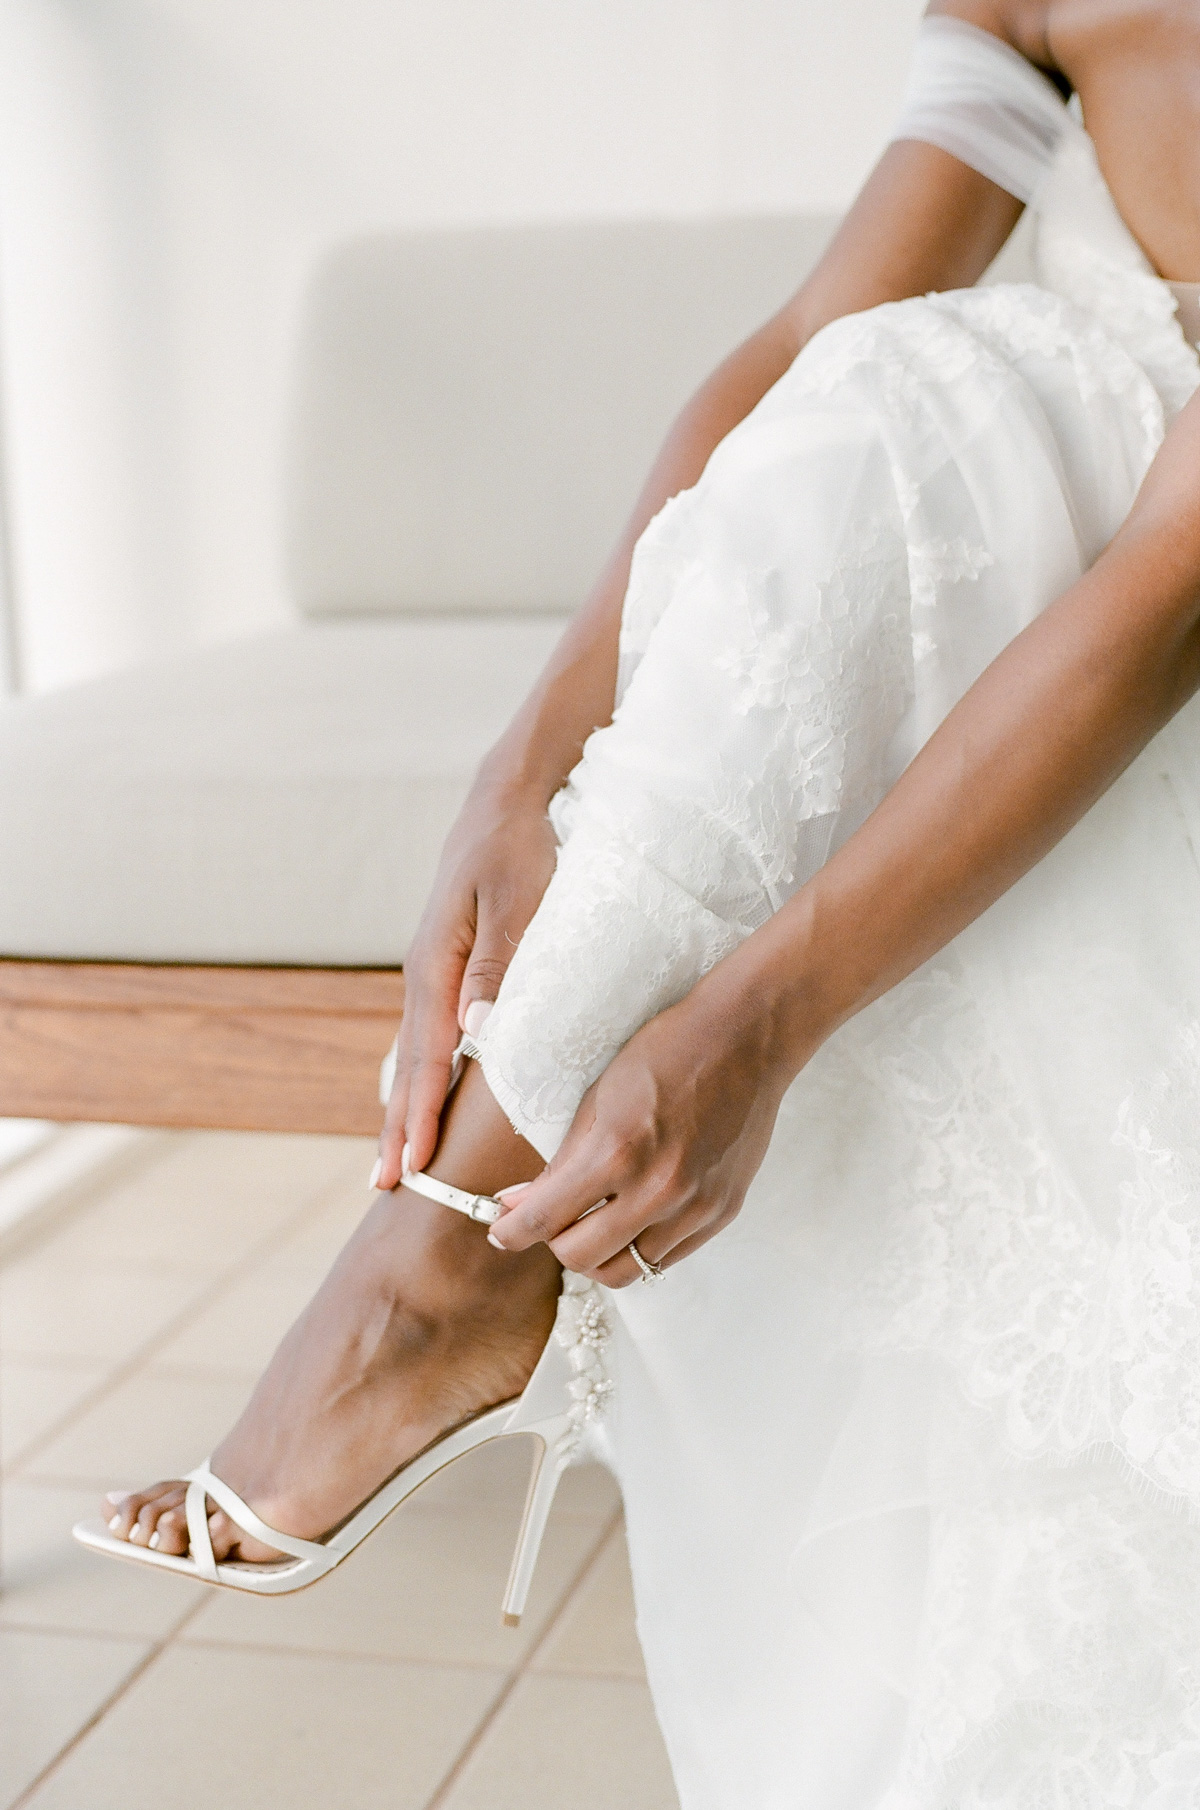 pronovas lace off the shoulder wedding dress with bella belle heels